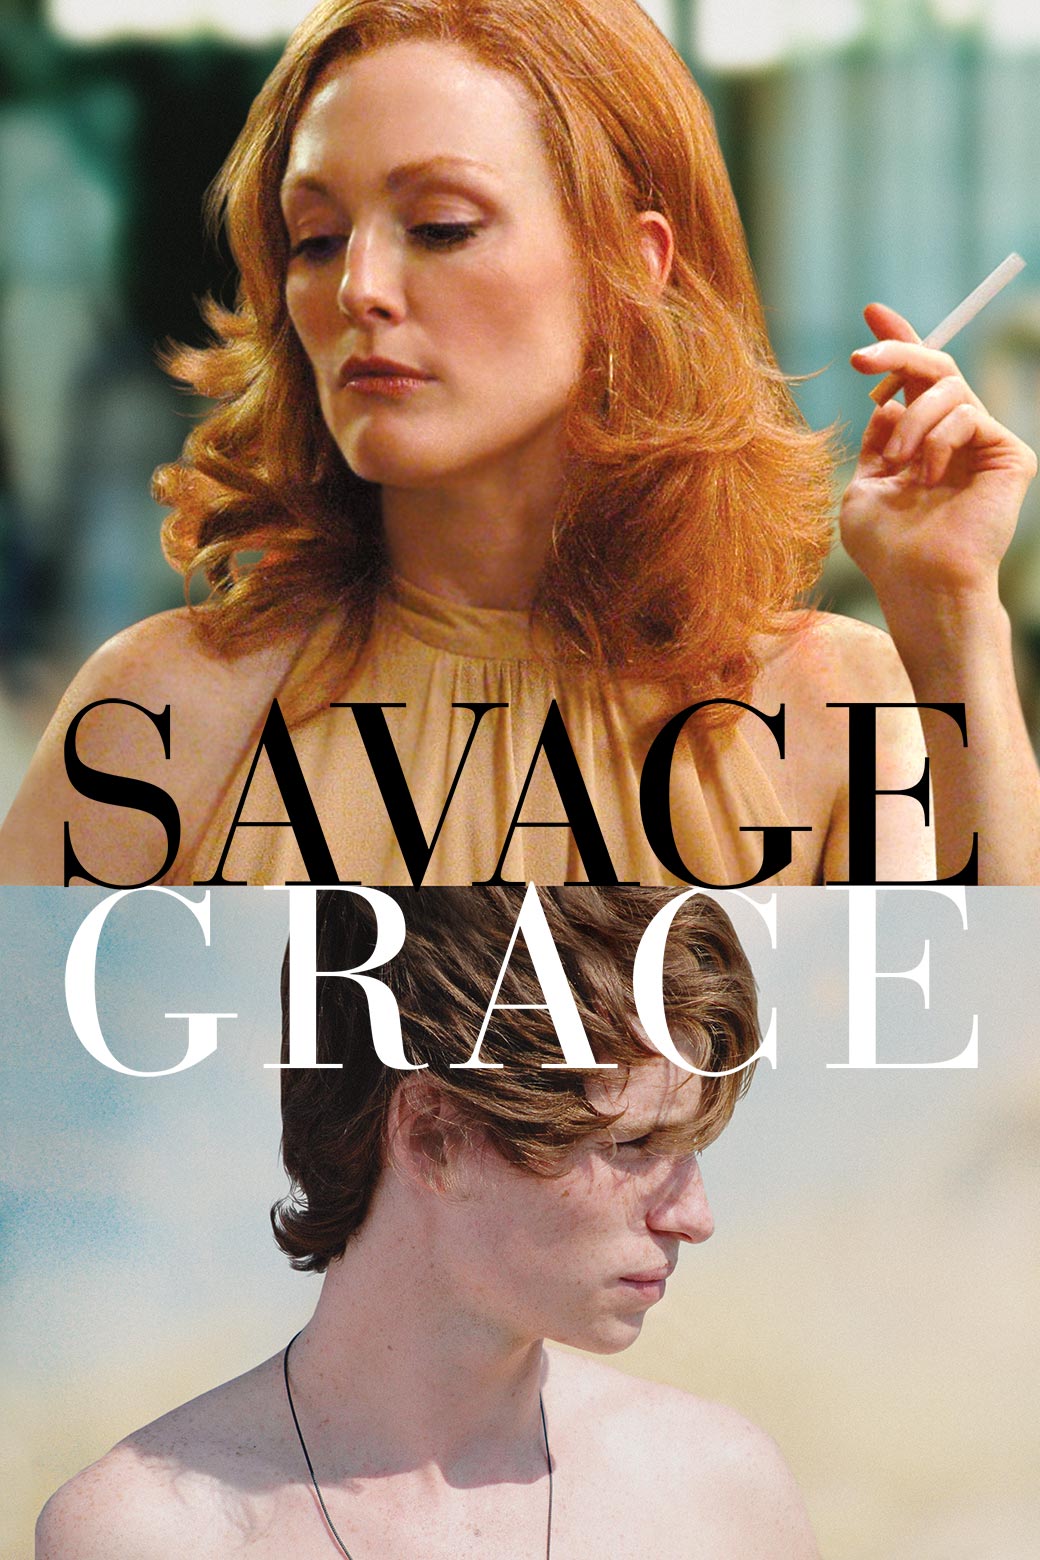 Savage Grace